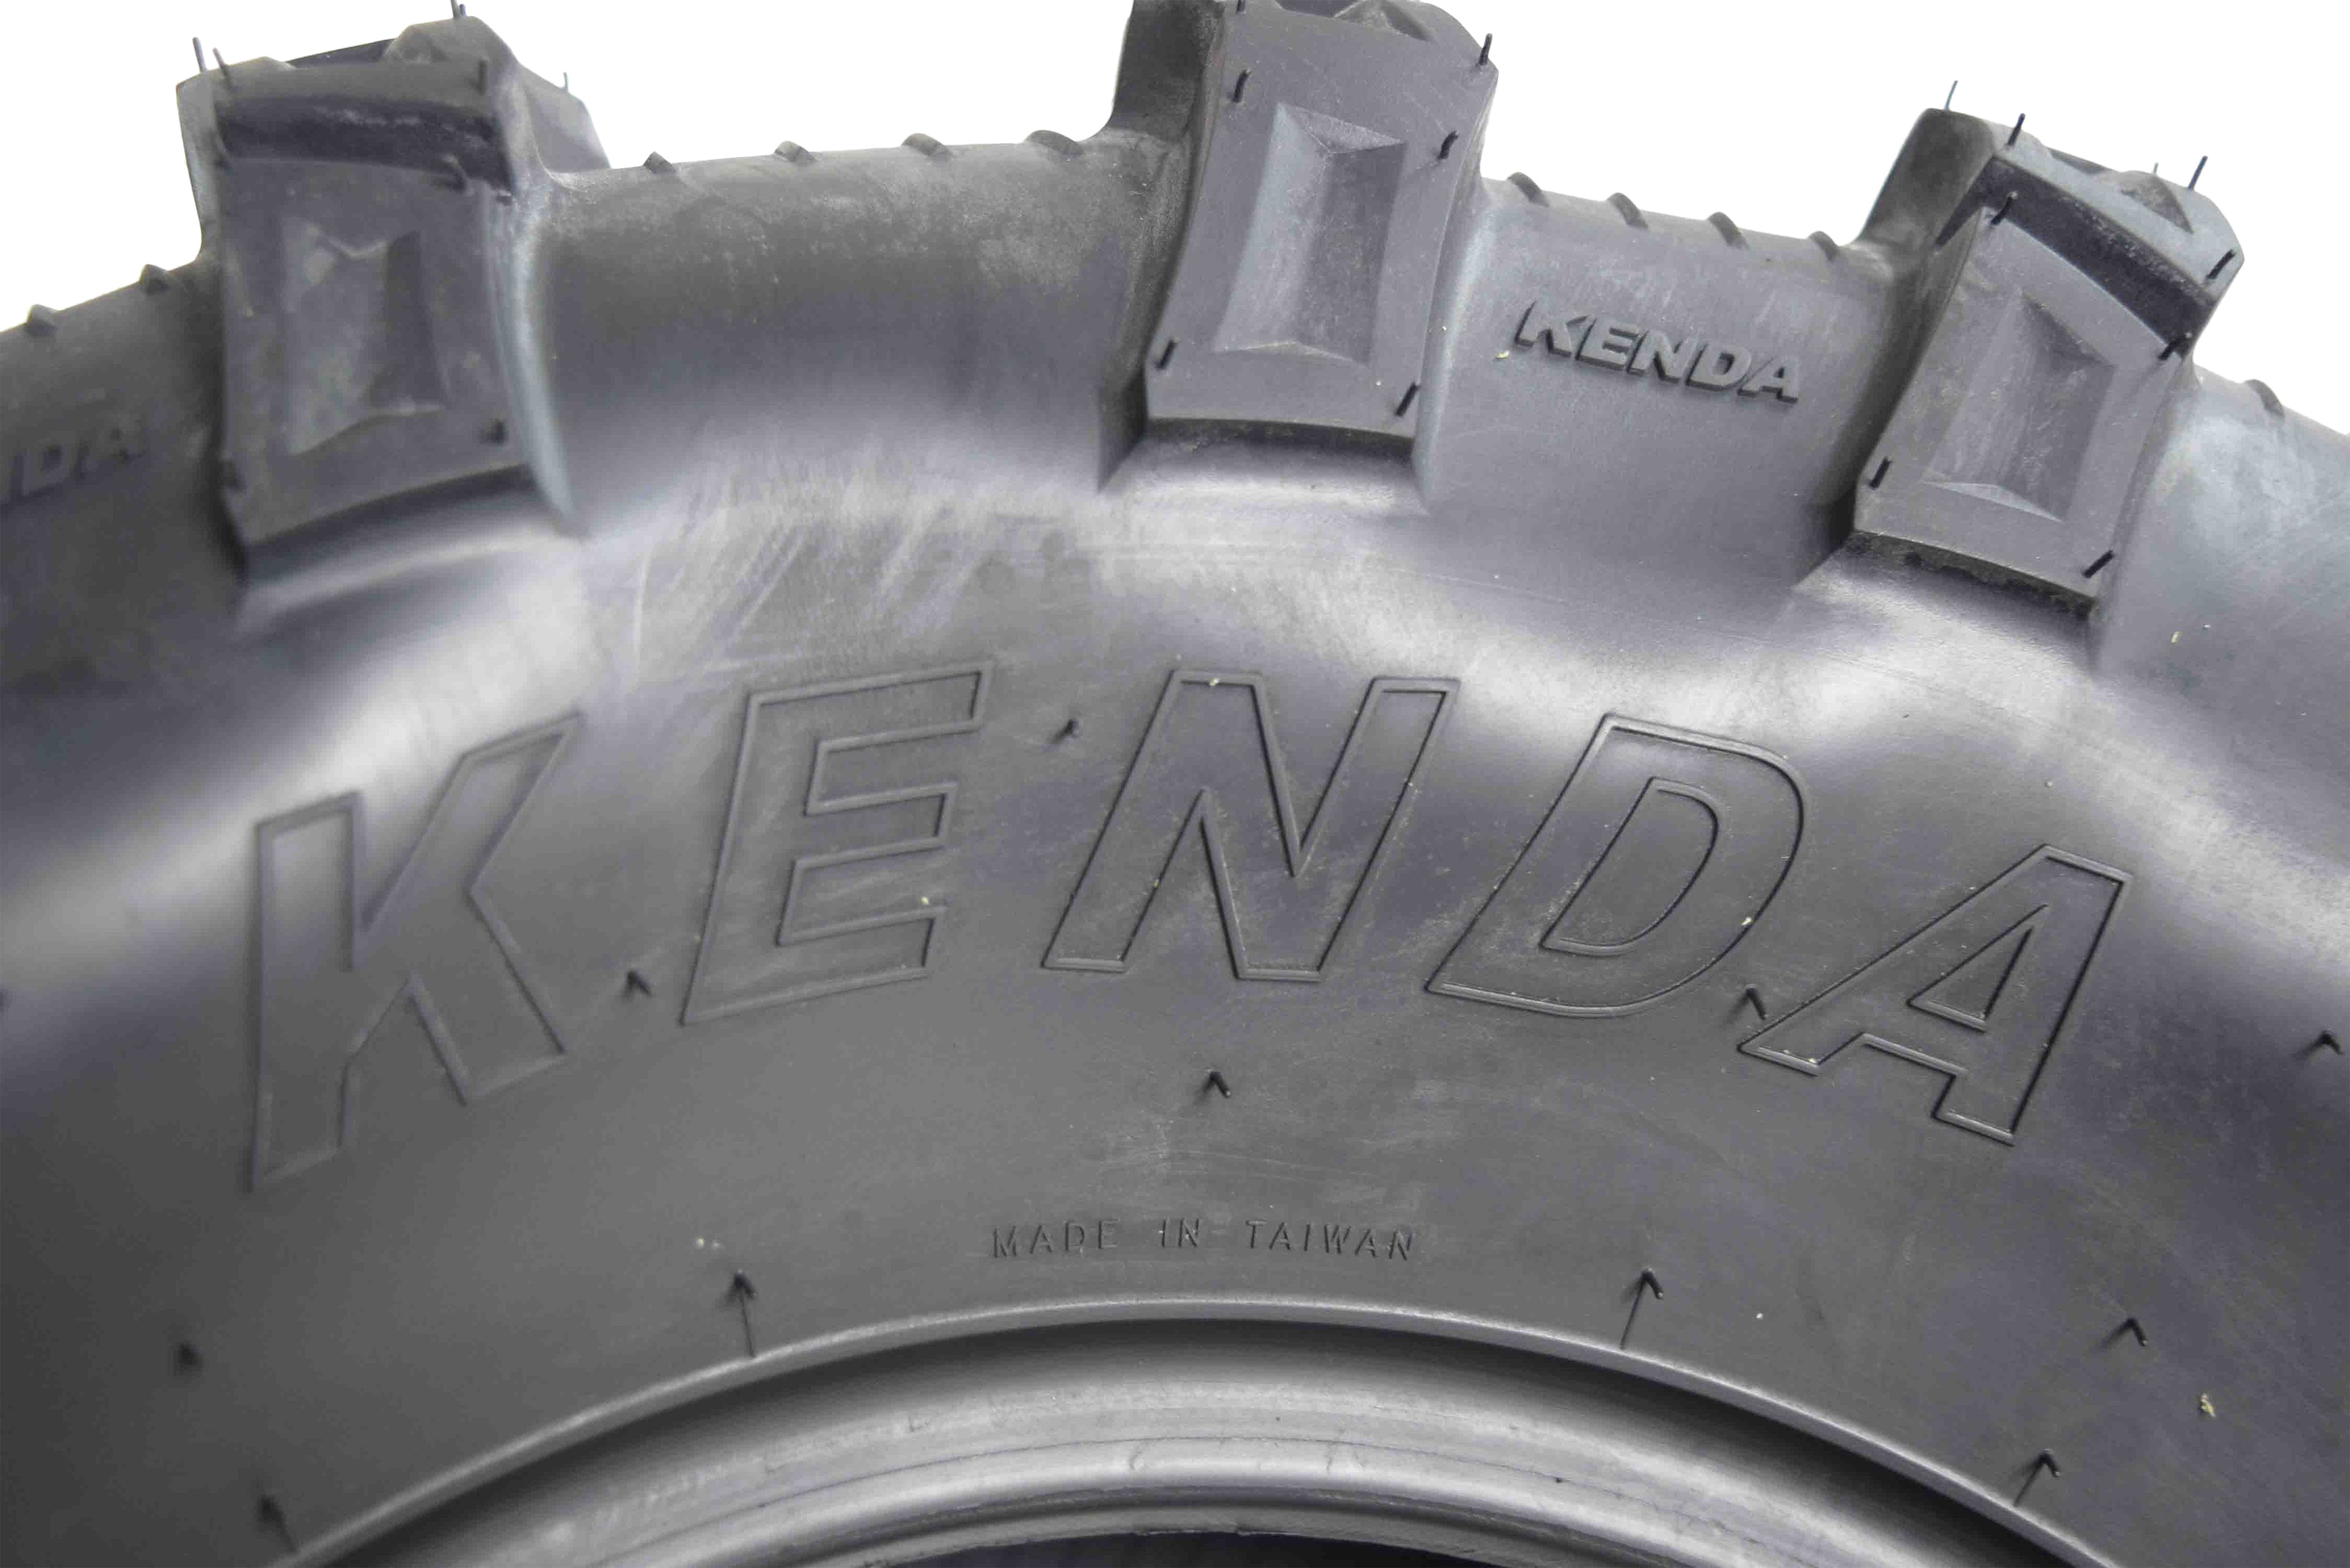 Kenda Bear Claw EVO  27x11-12 Rear ATV/UTV Tires 2 Pack with Bottle Opener Keychain